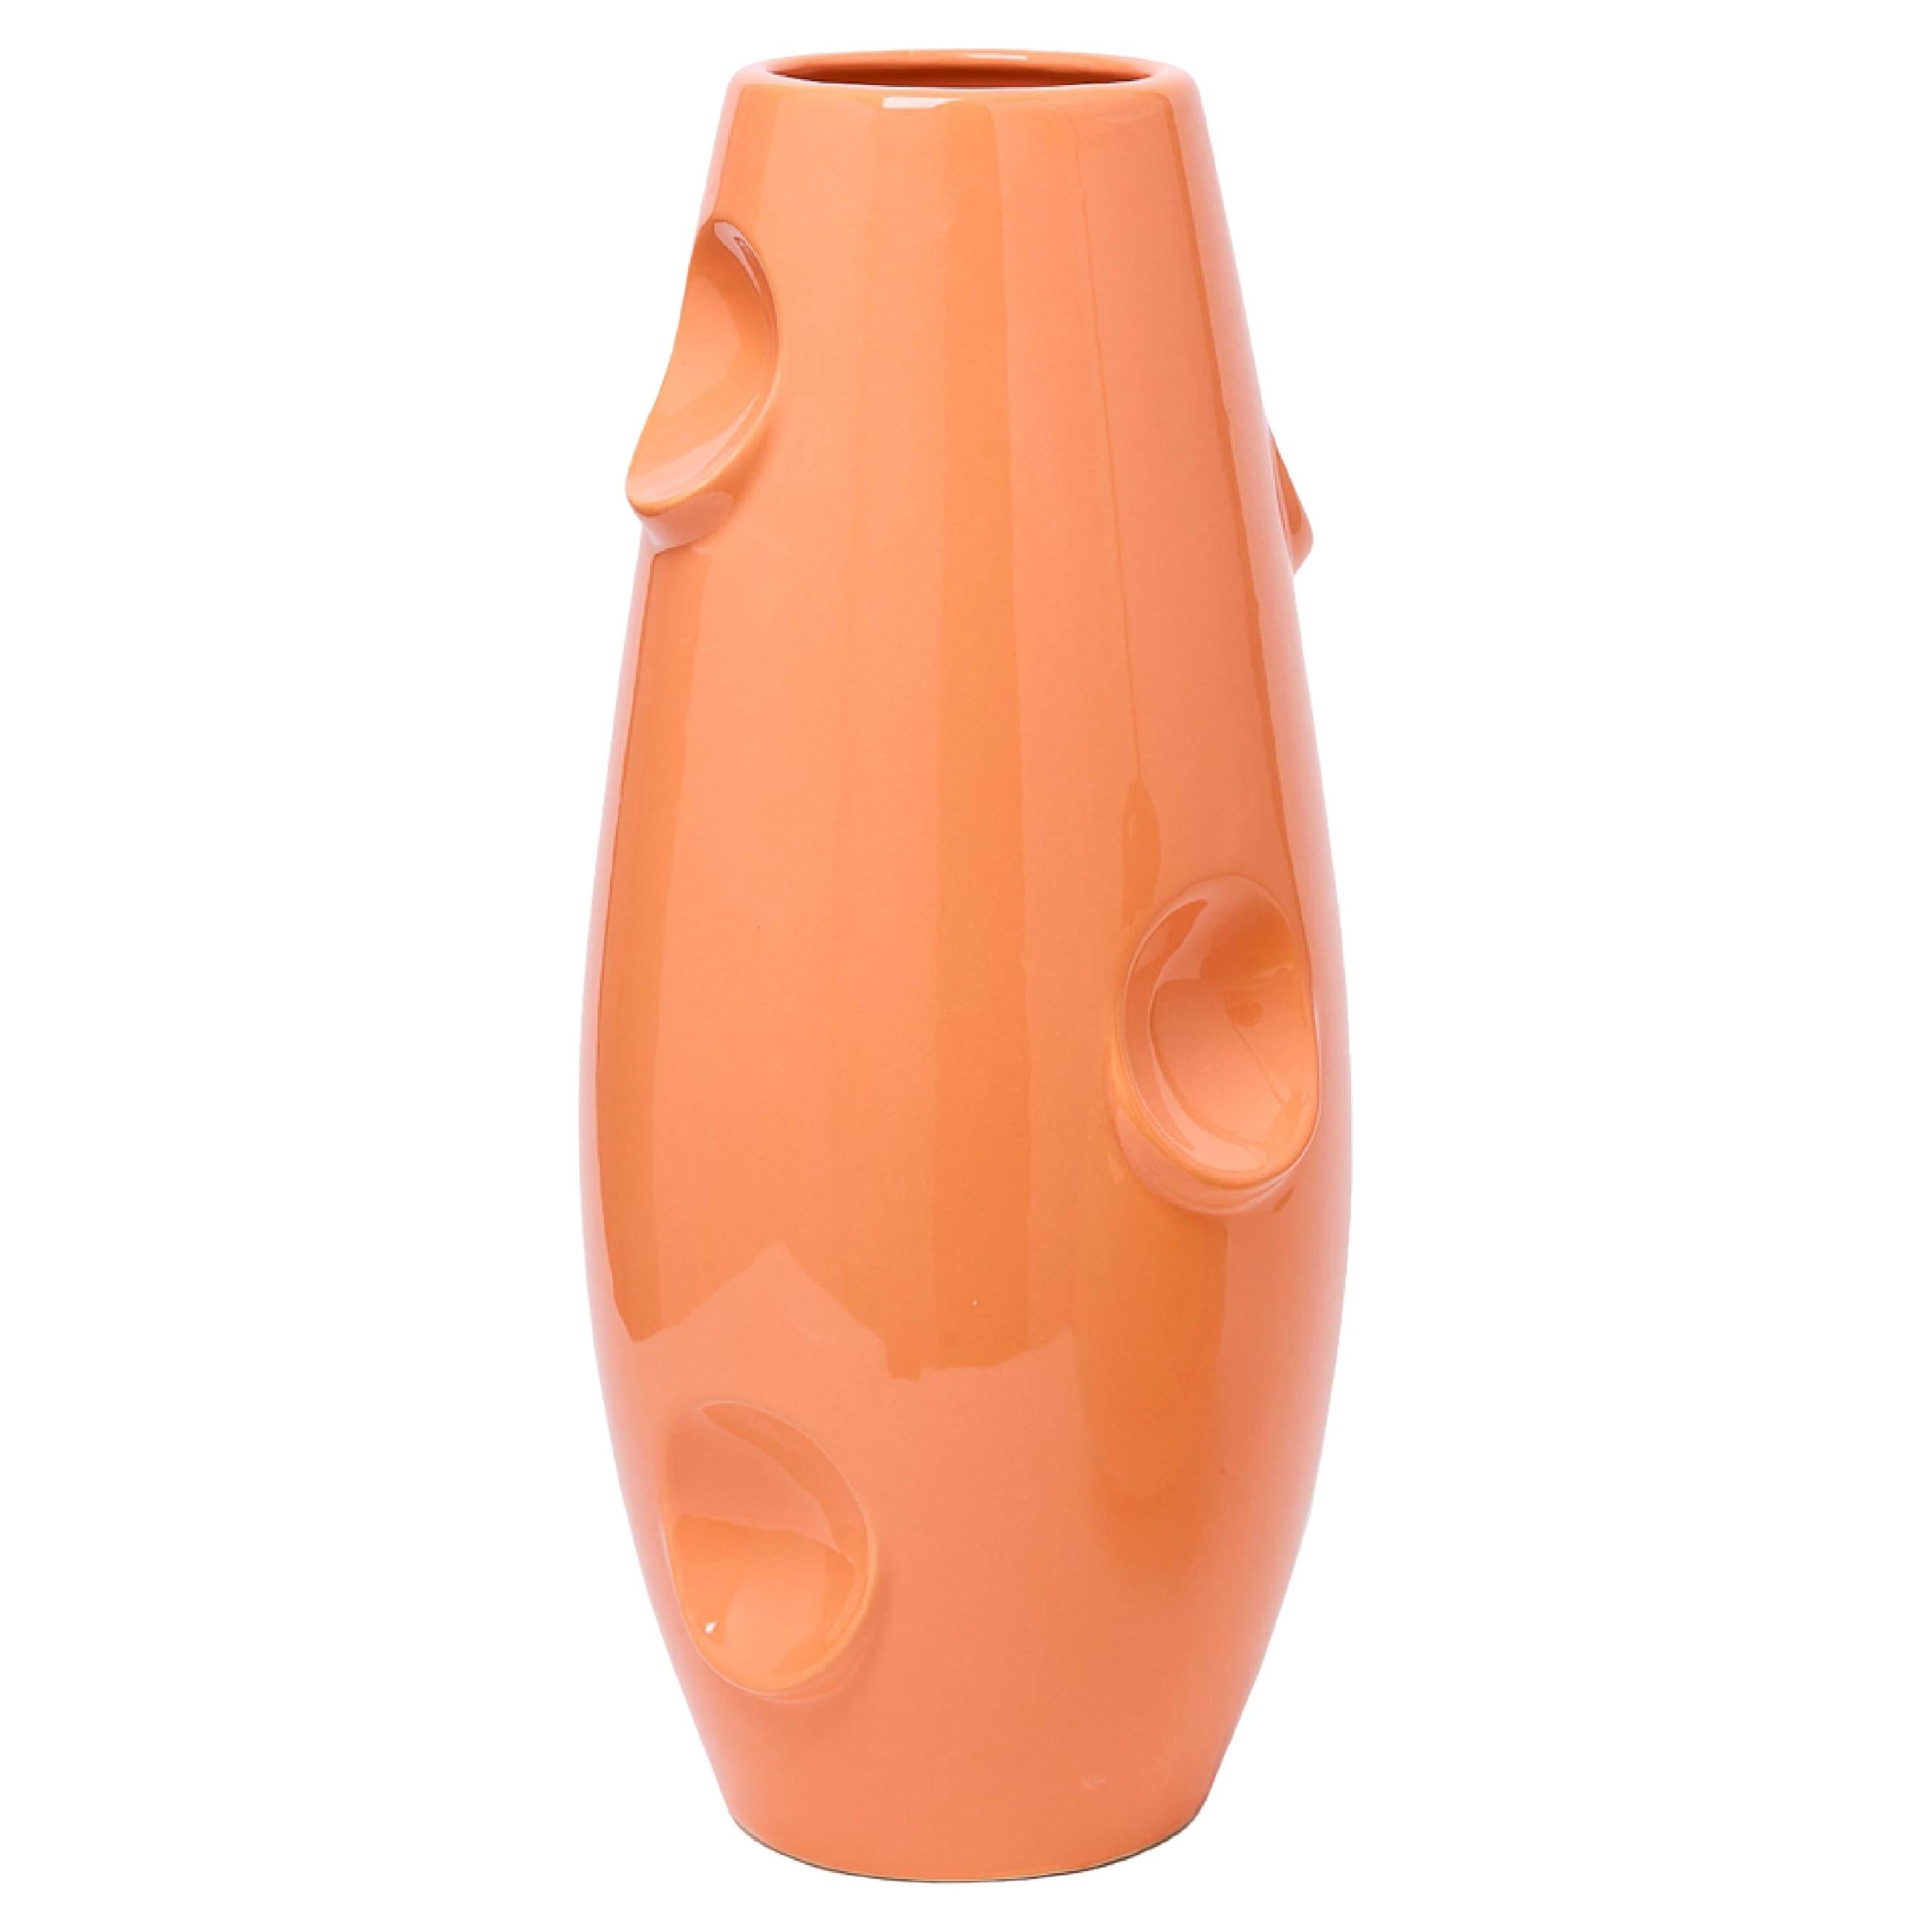 Oko / Orange Vase by Malwina Konopacka For Sale